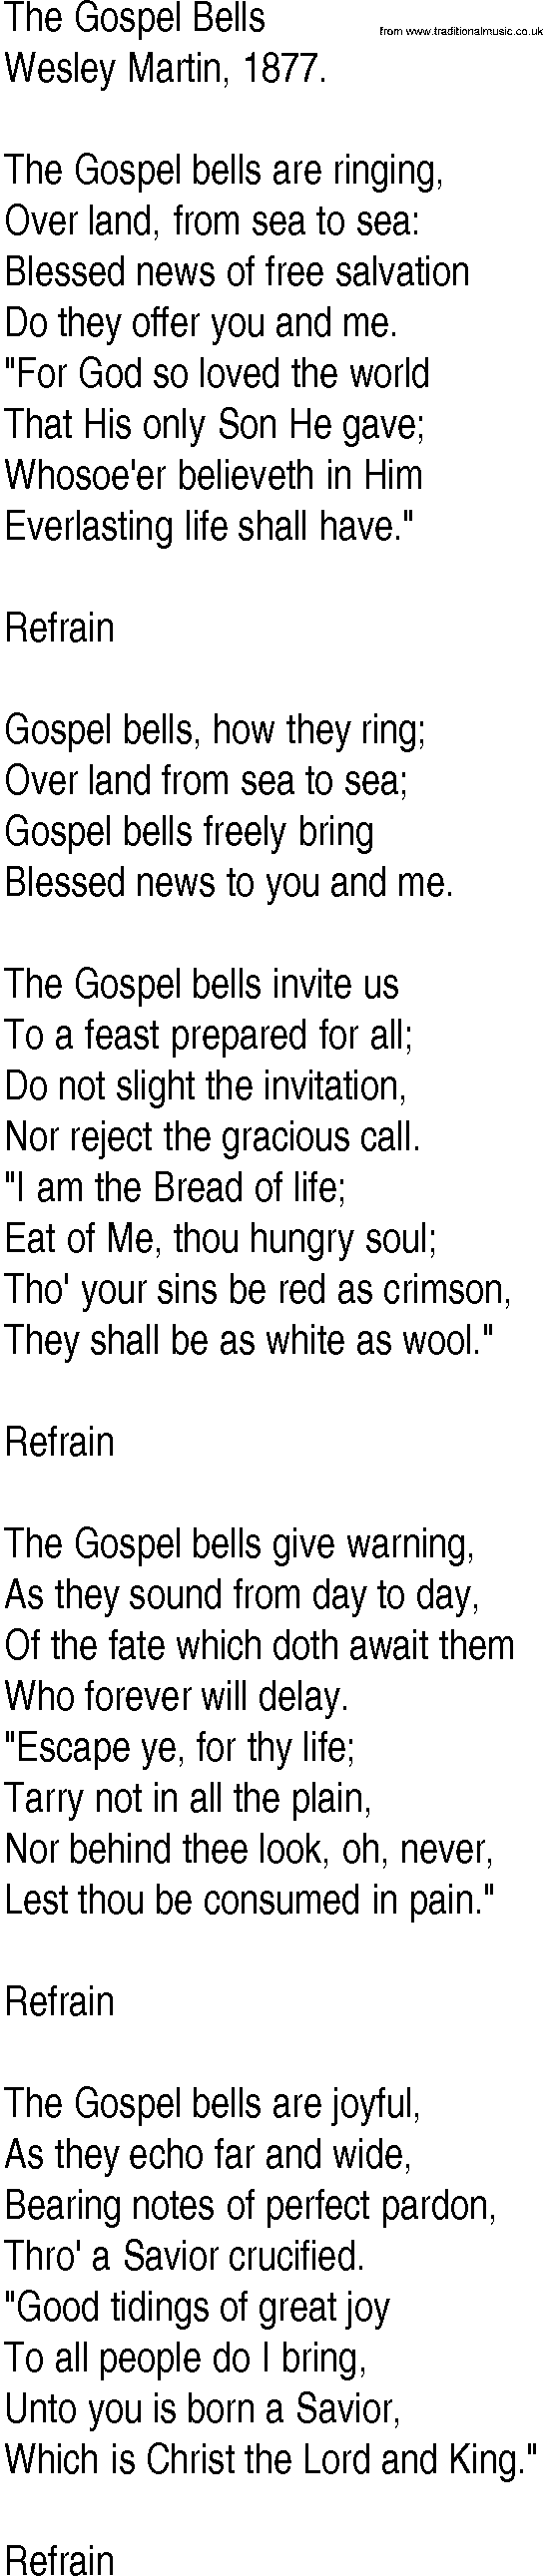 Hymn and Gospel Song: The Gospel Bells by Wesley Martin lyrics